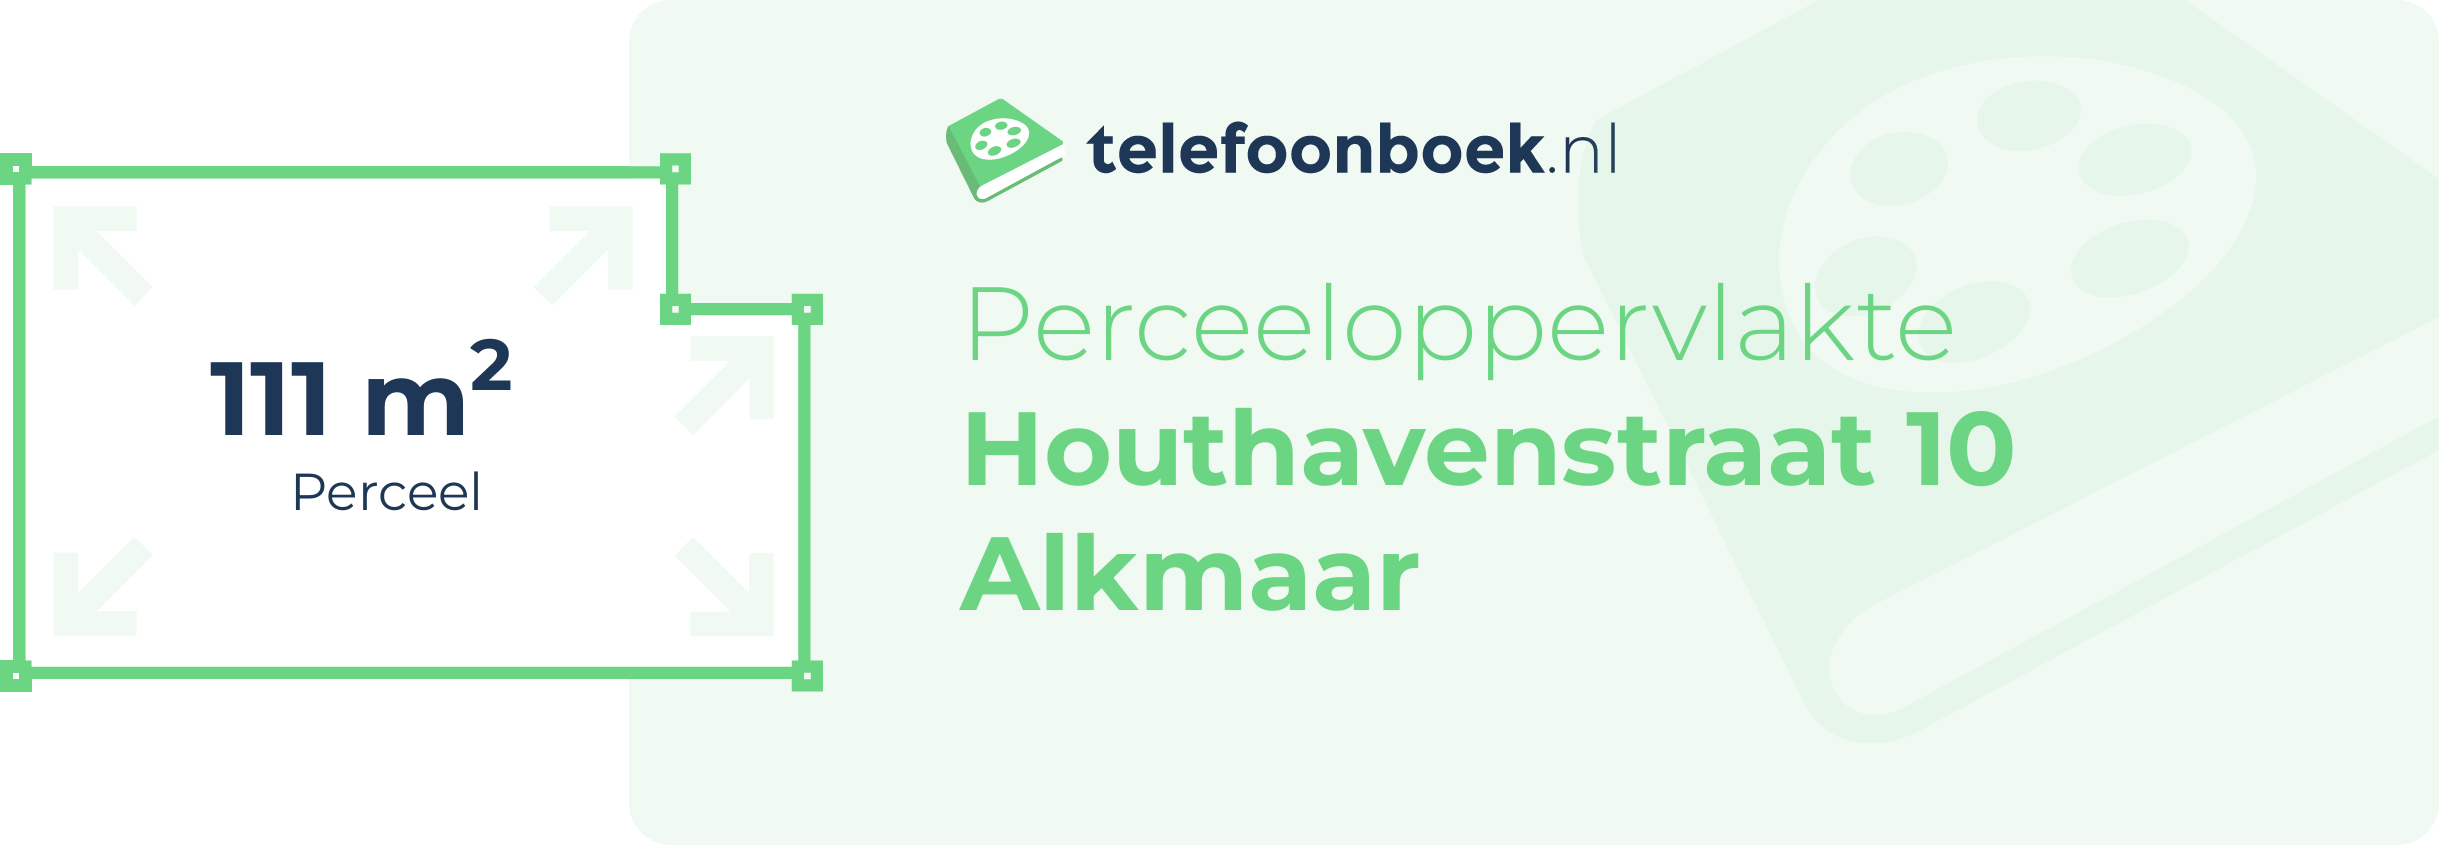 Perceeloppervlakte Houthavenstraat 10 Alkmaar